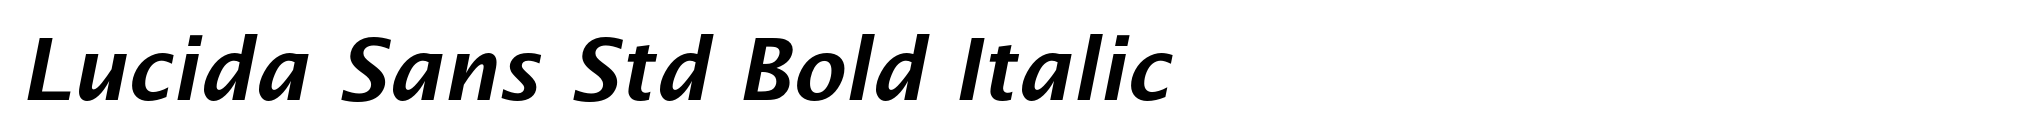 Lucida Sans Std Bold Italic image